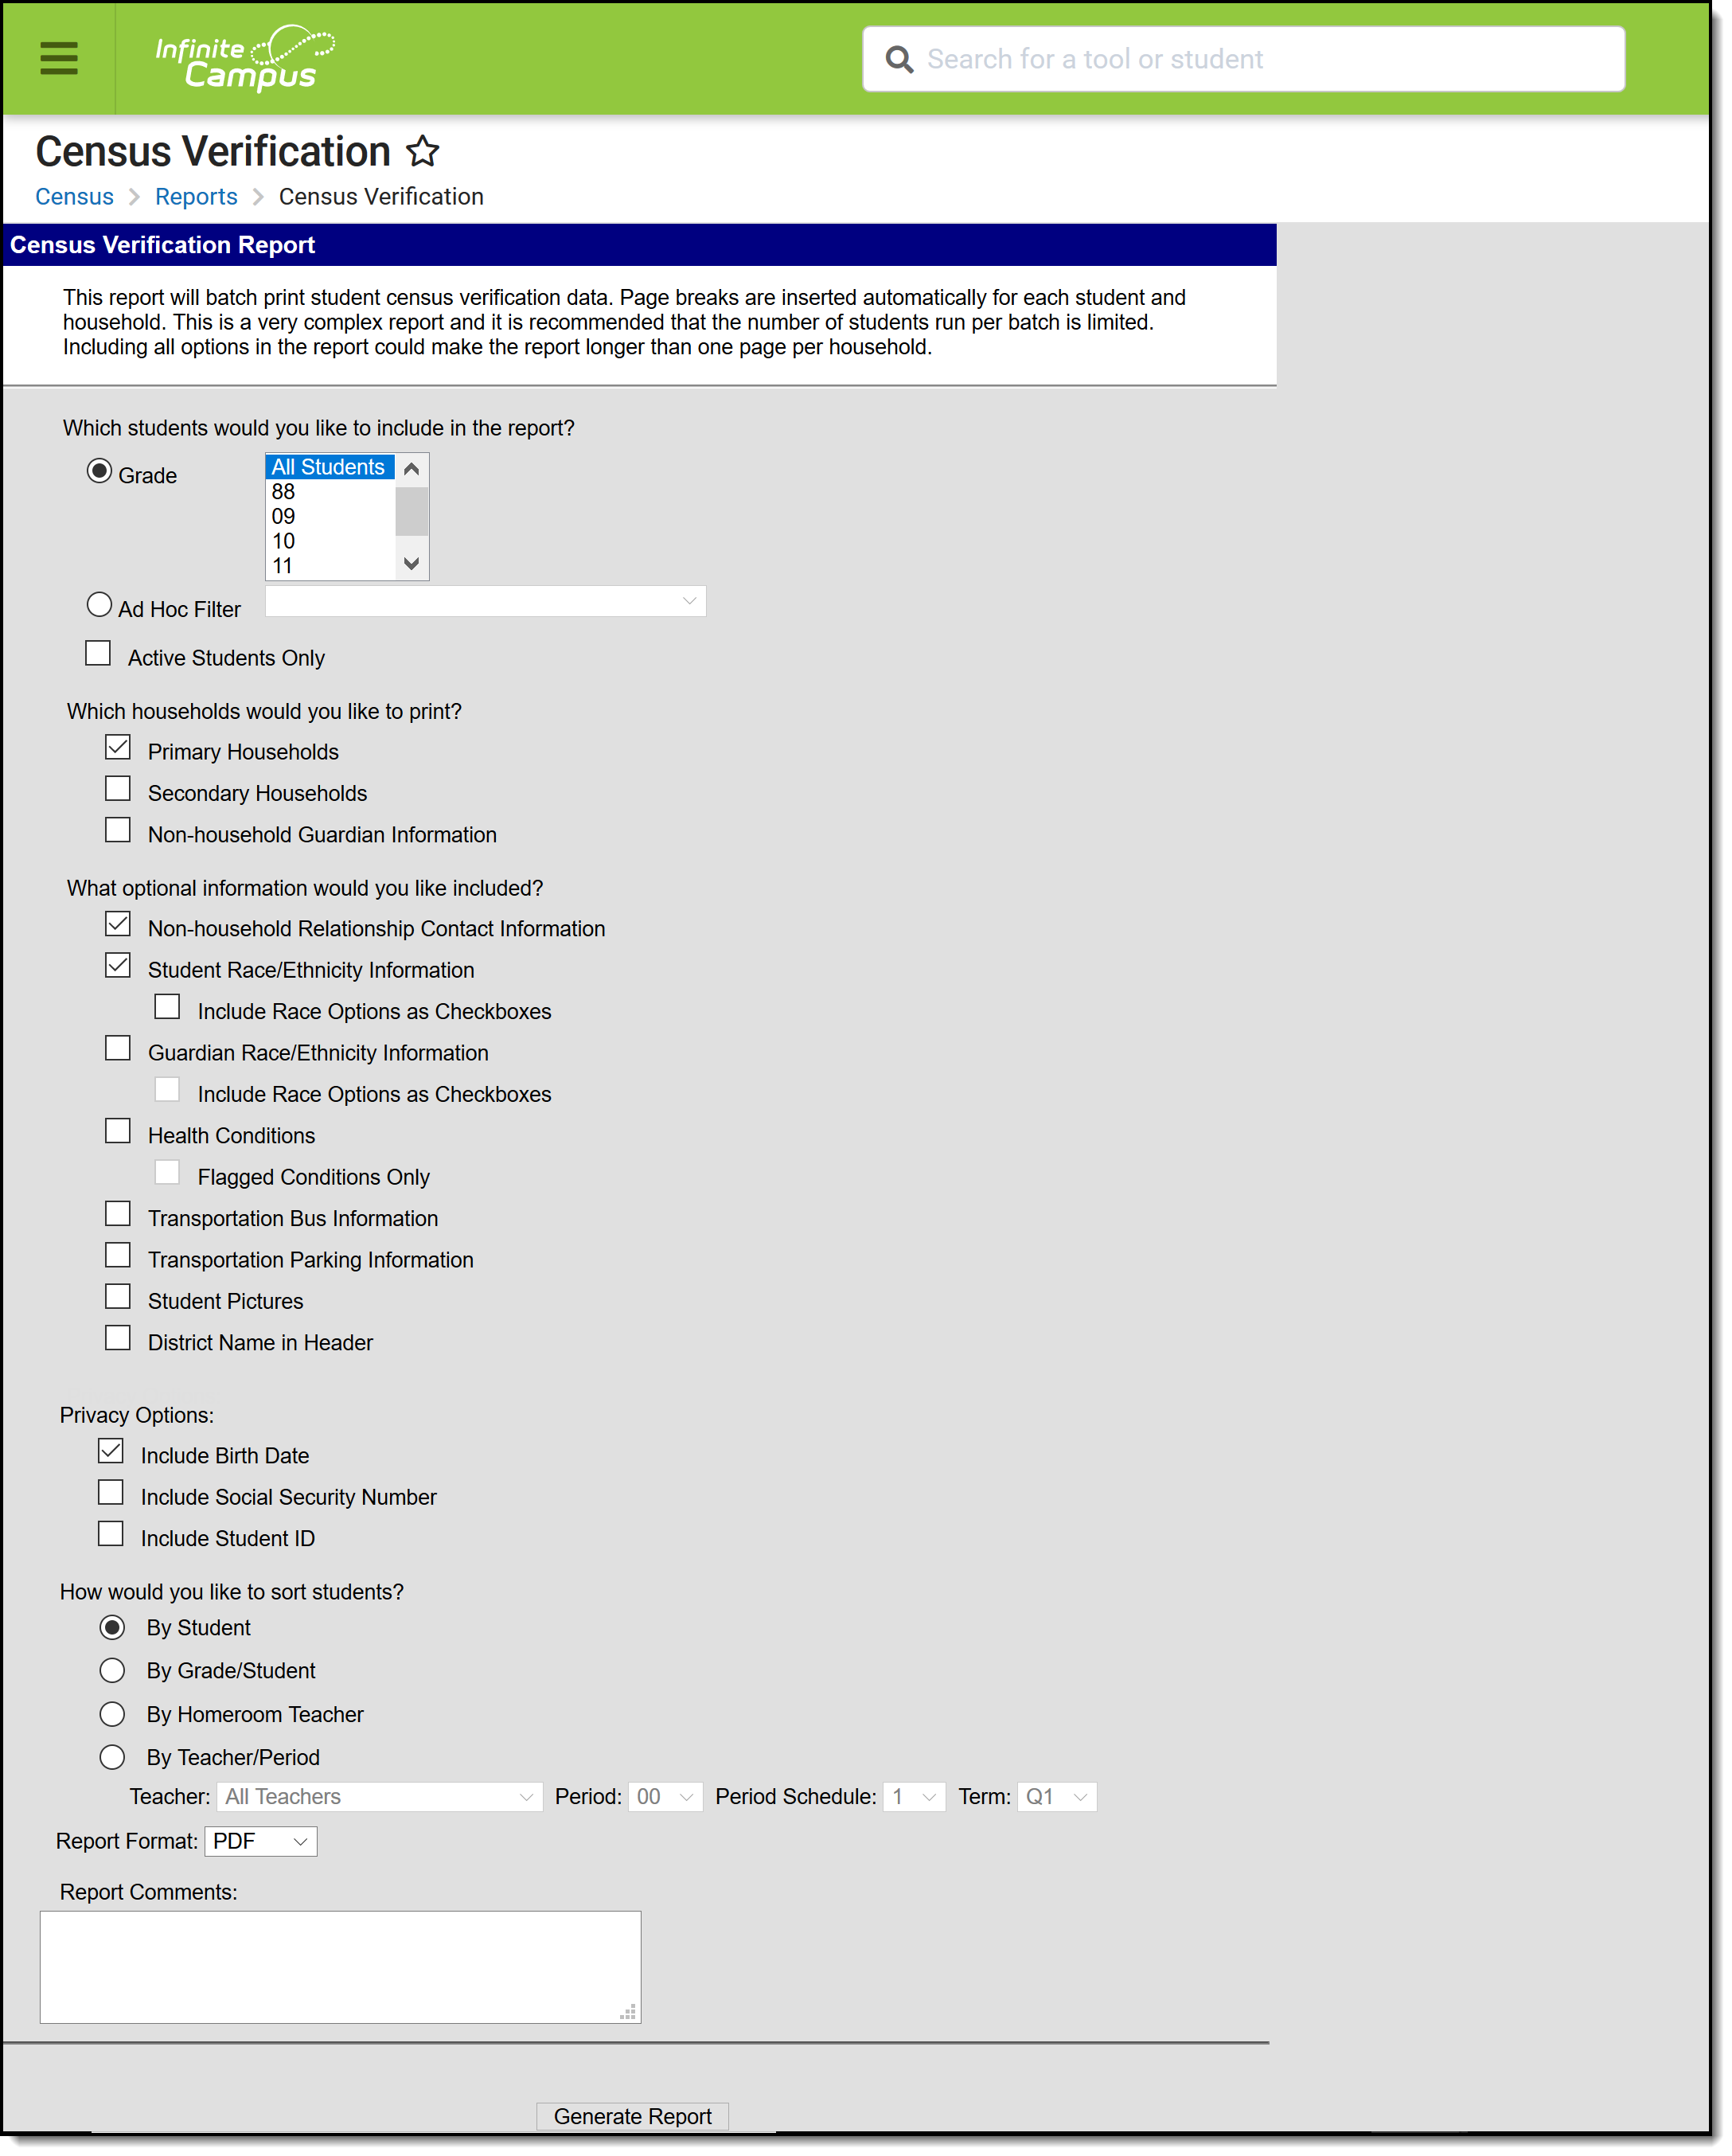 Screenshot of the Census Verification Report tool.